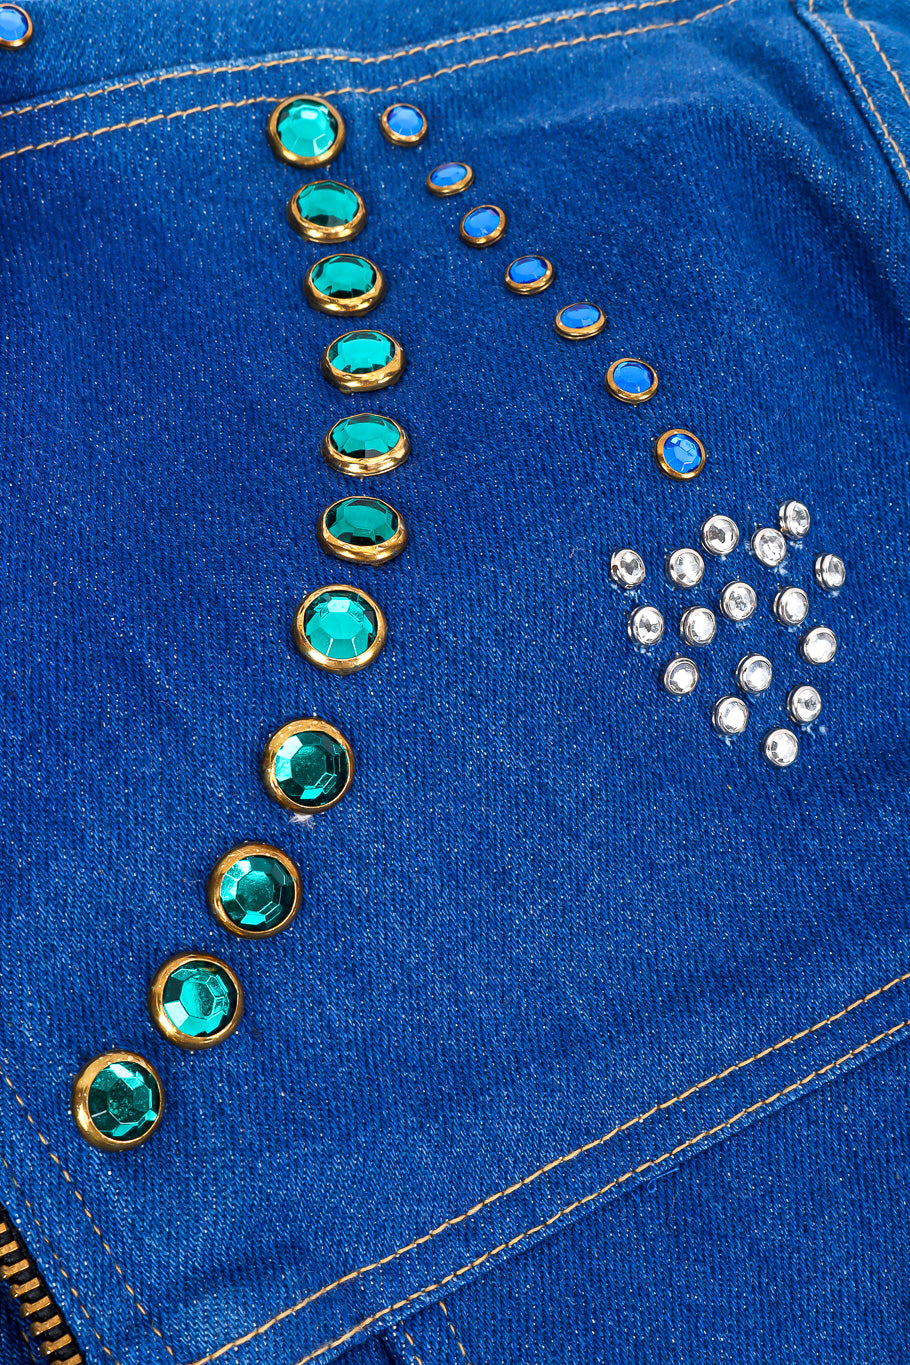 Vintage Lillie Rubin Crystal Studded Denim Jacket rhinestone studded chain and arrow closeup @Recessla